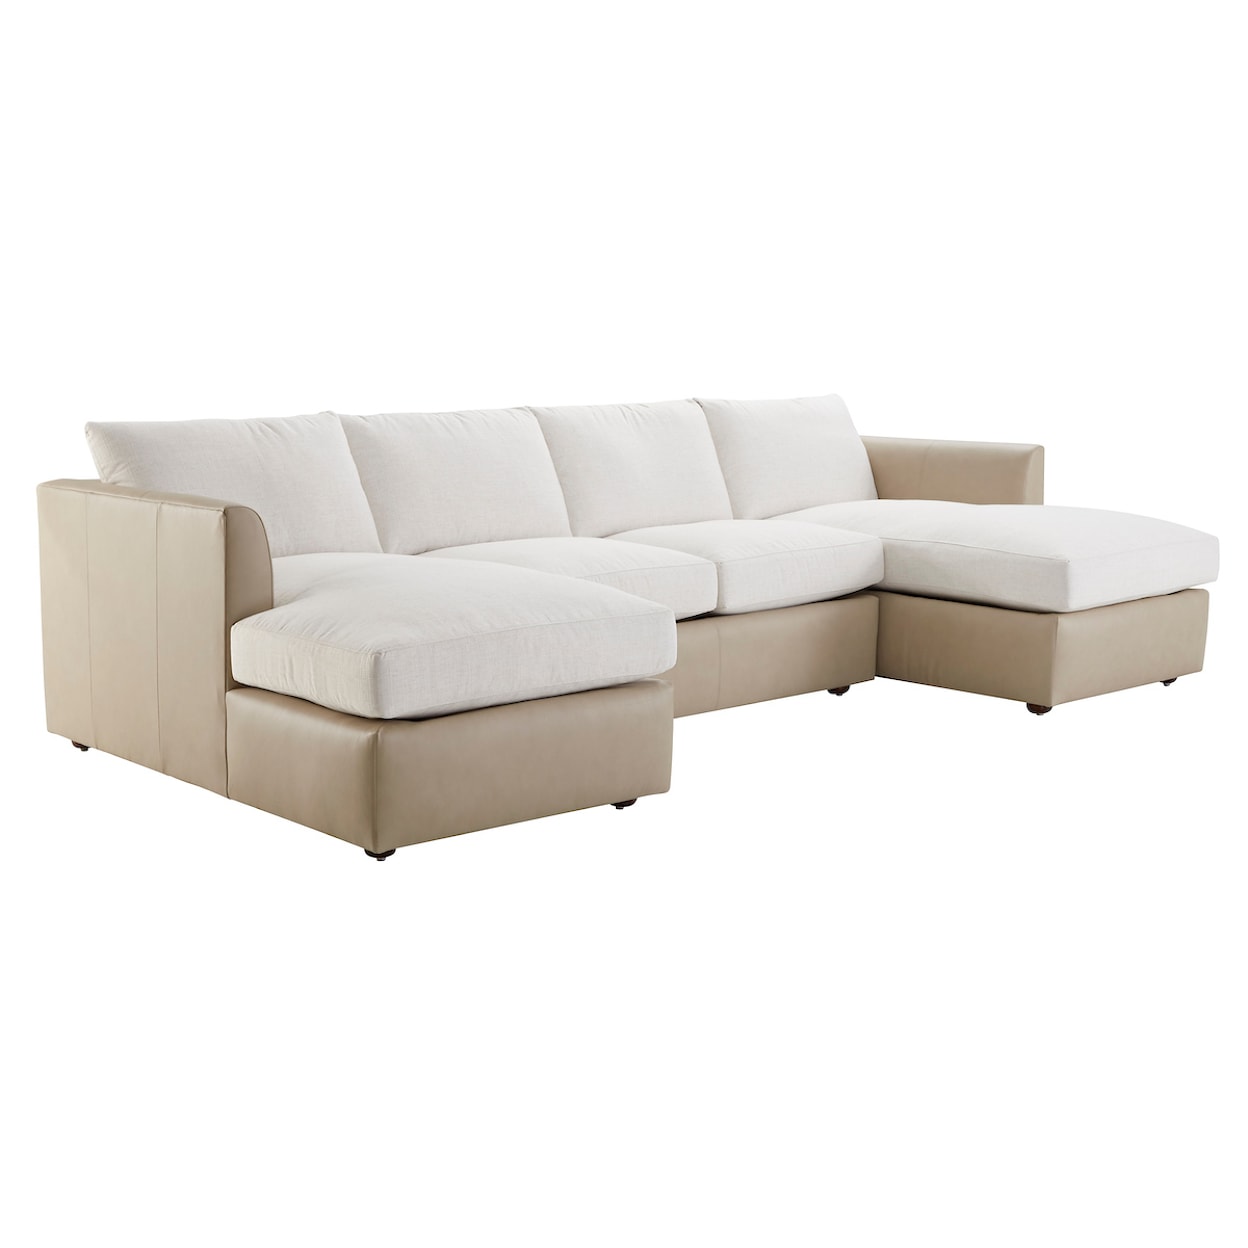 Klaussner Alamitos 3-Piece Chaise Sofa